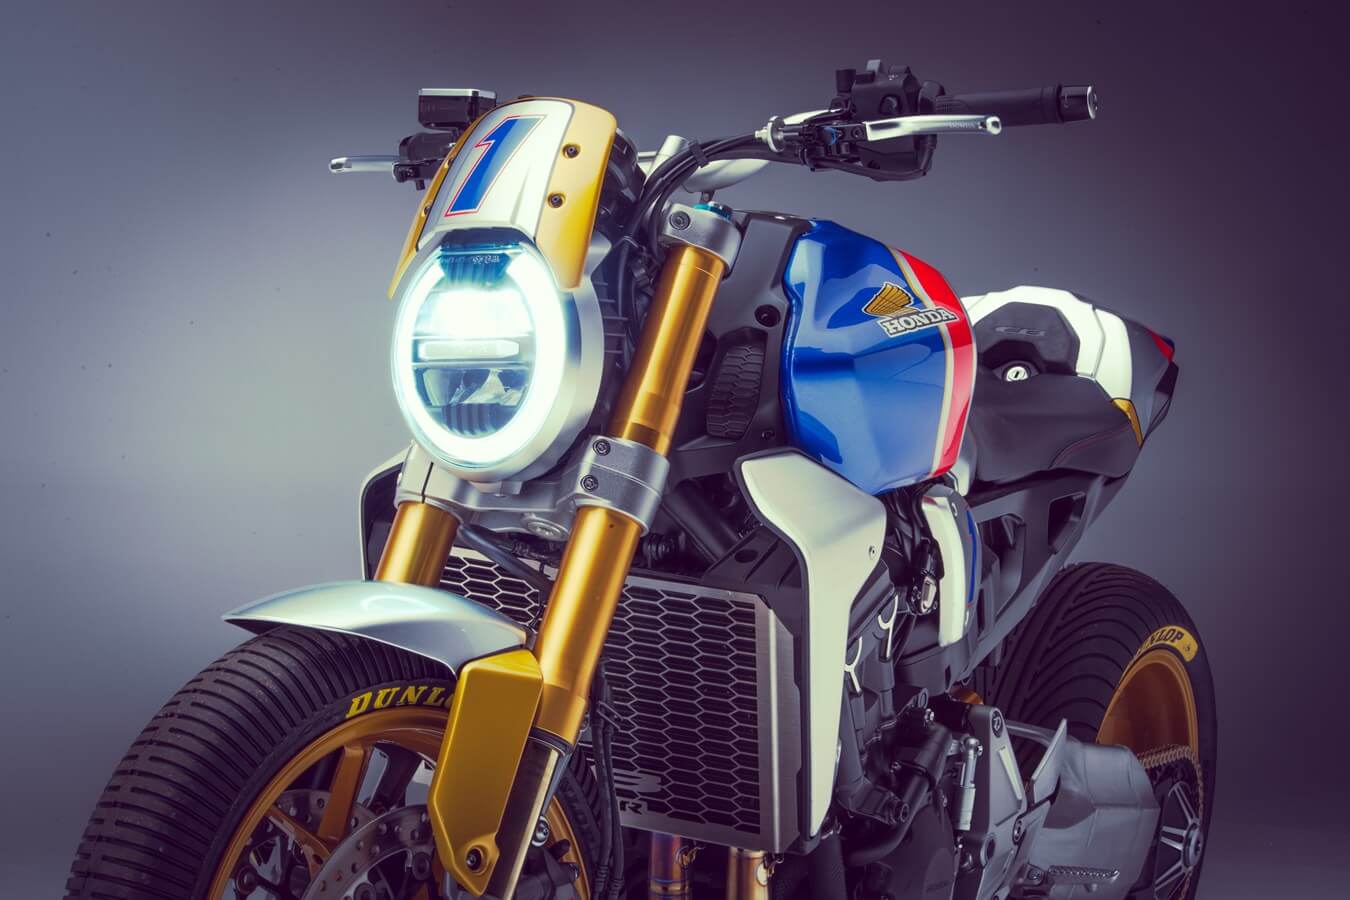 Custom 2018 Honda CB1000R Naked Sport Bike (Honda Racing) | Neo Sports Cafe StreetFighter Motorcycle | CBR 1000 RR / CBR1000RR